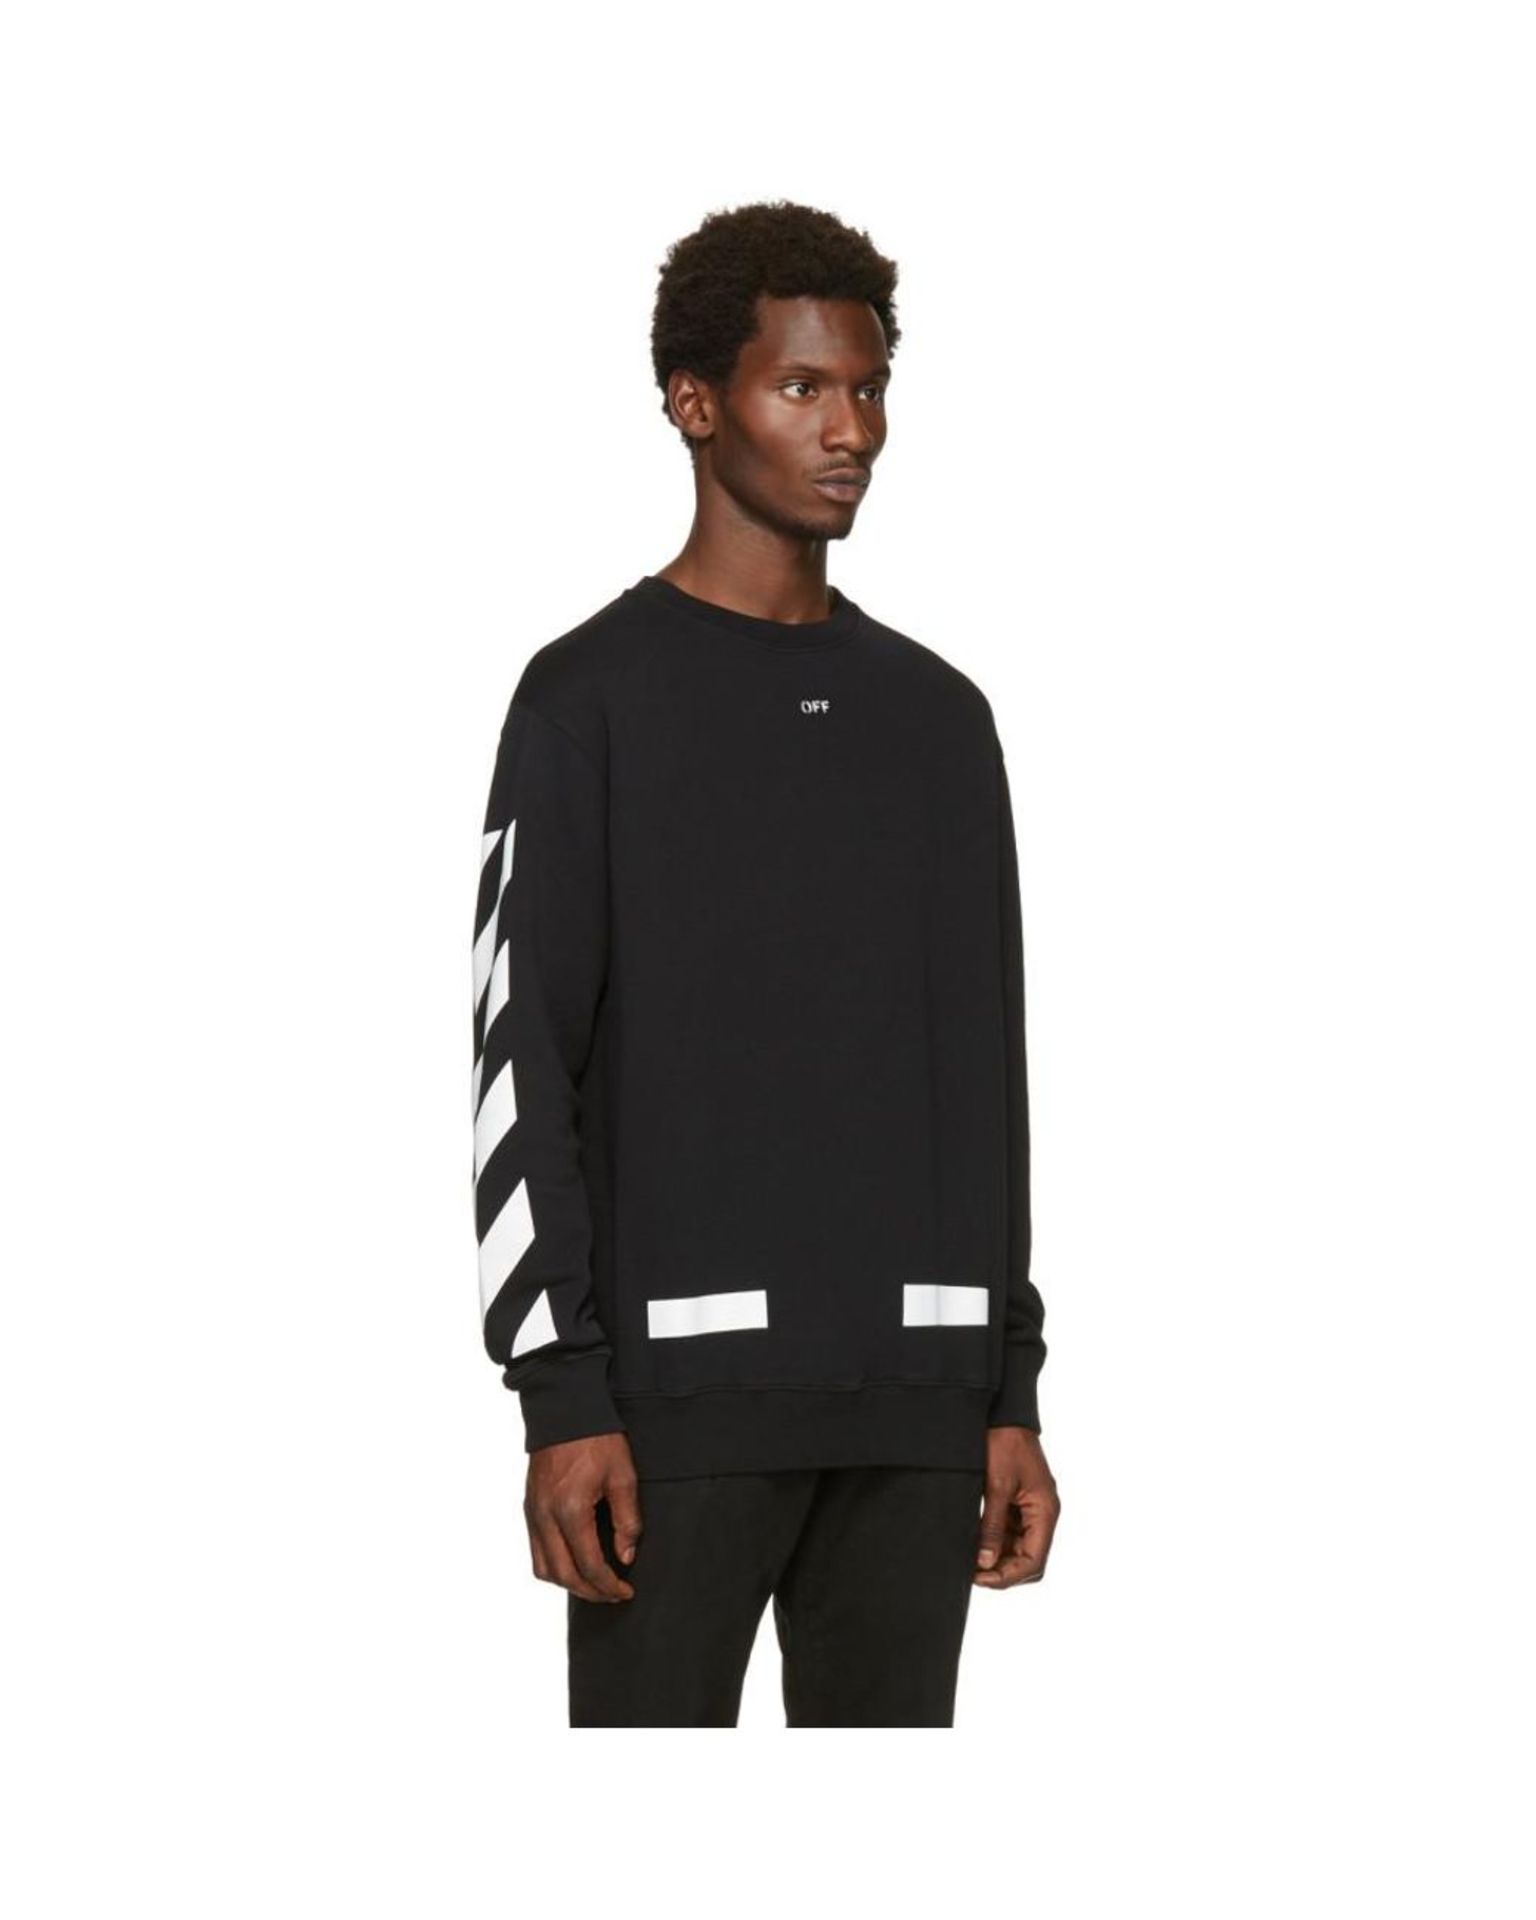 BRAND NEW OFF-WHITE Diagonal Arrow Sweatshirt. BLACK. SIZE SMALL. RRP £355. (OFC)